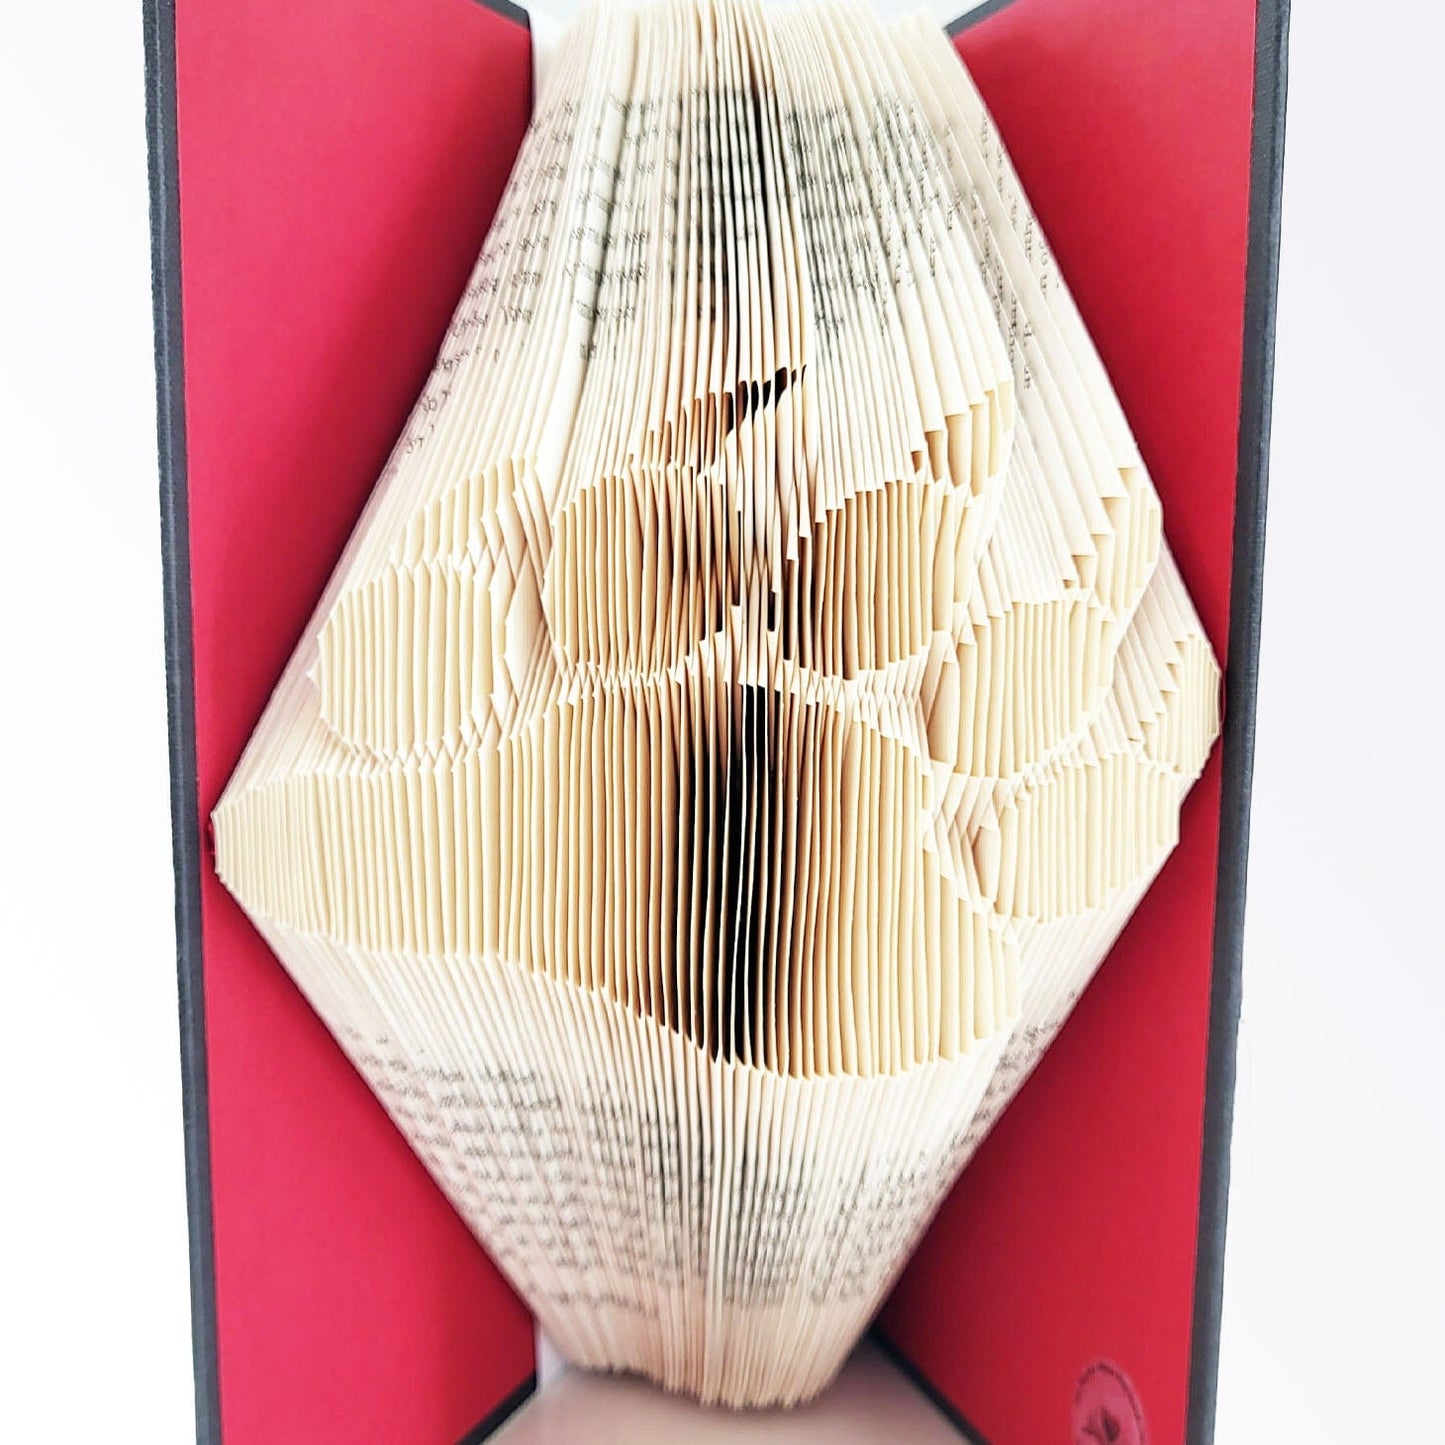 Folded Book Art - Bear Paw